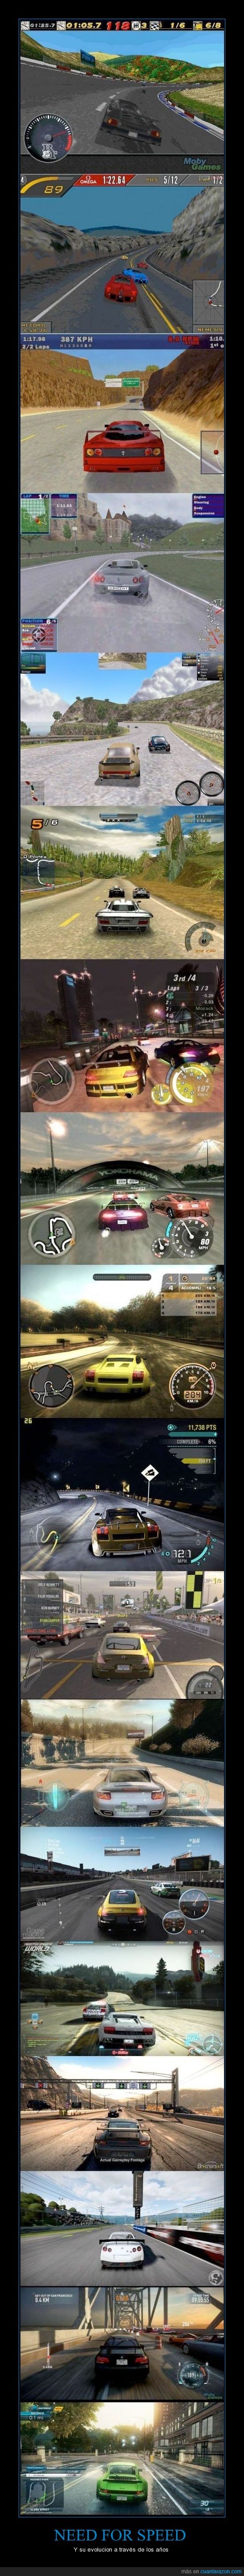 coche,need for speed,evolucion,años,3d,hd,carrera,gamer,videojuego